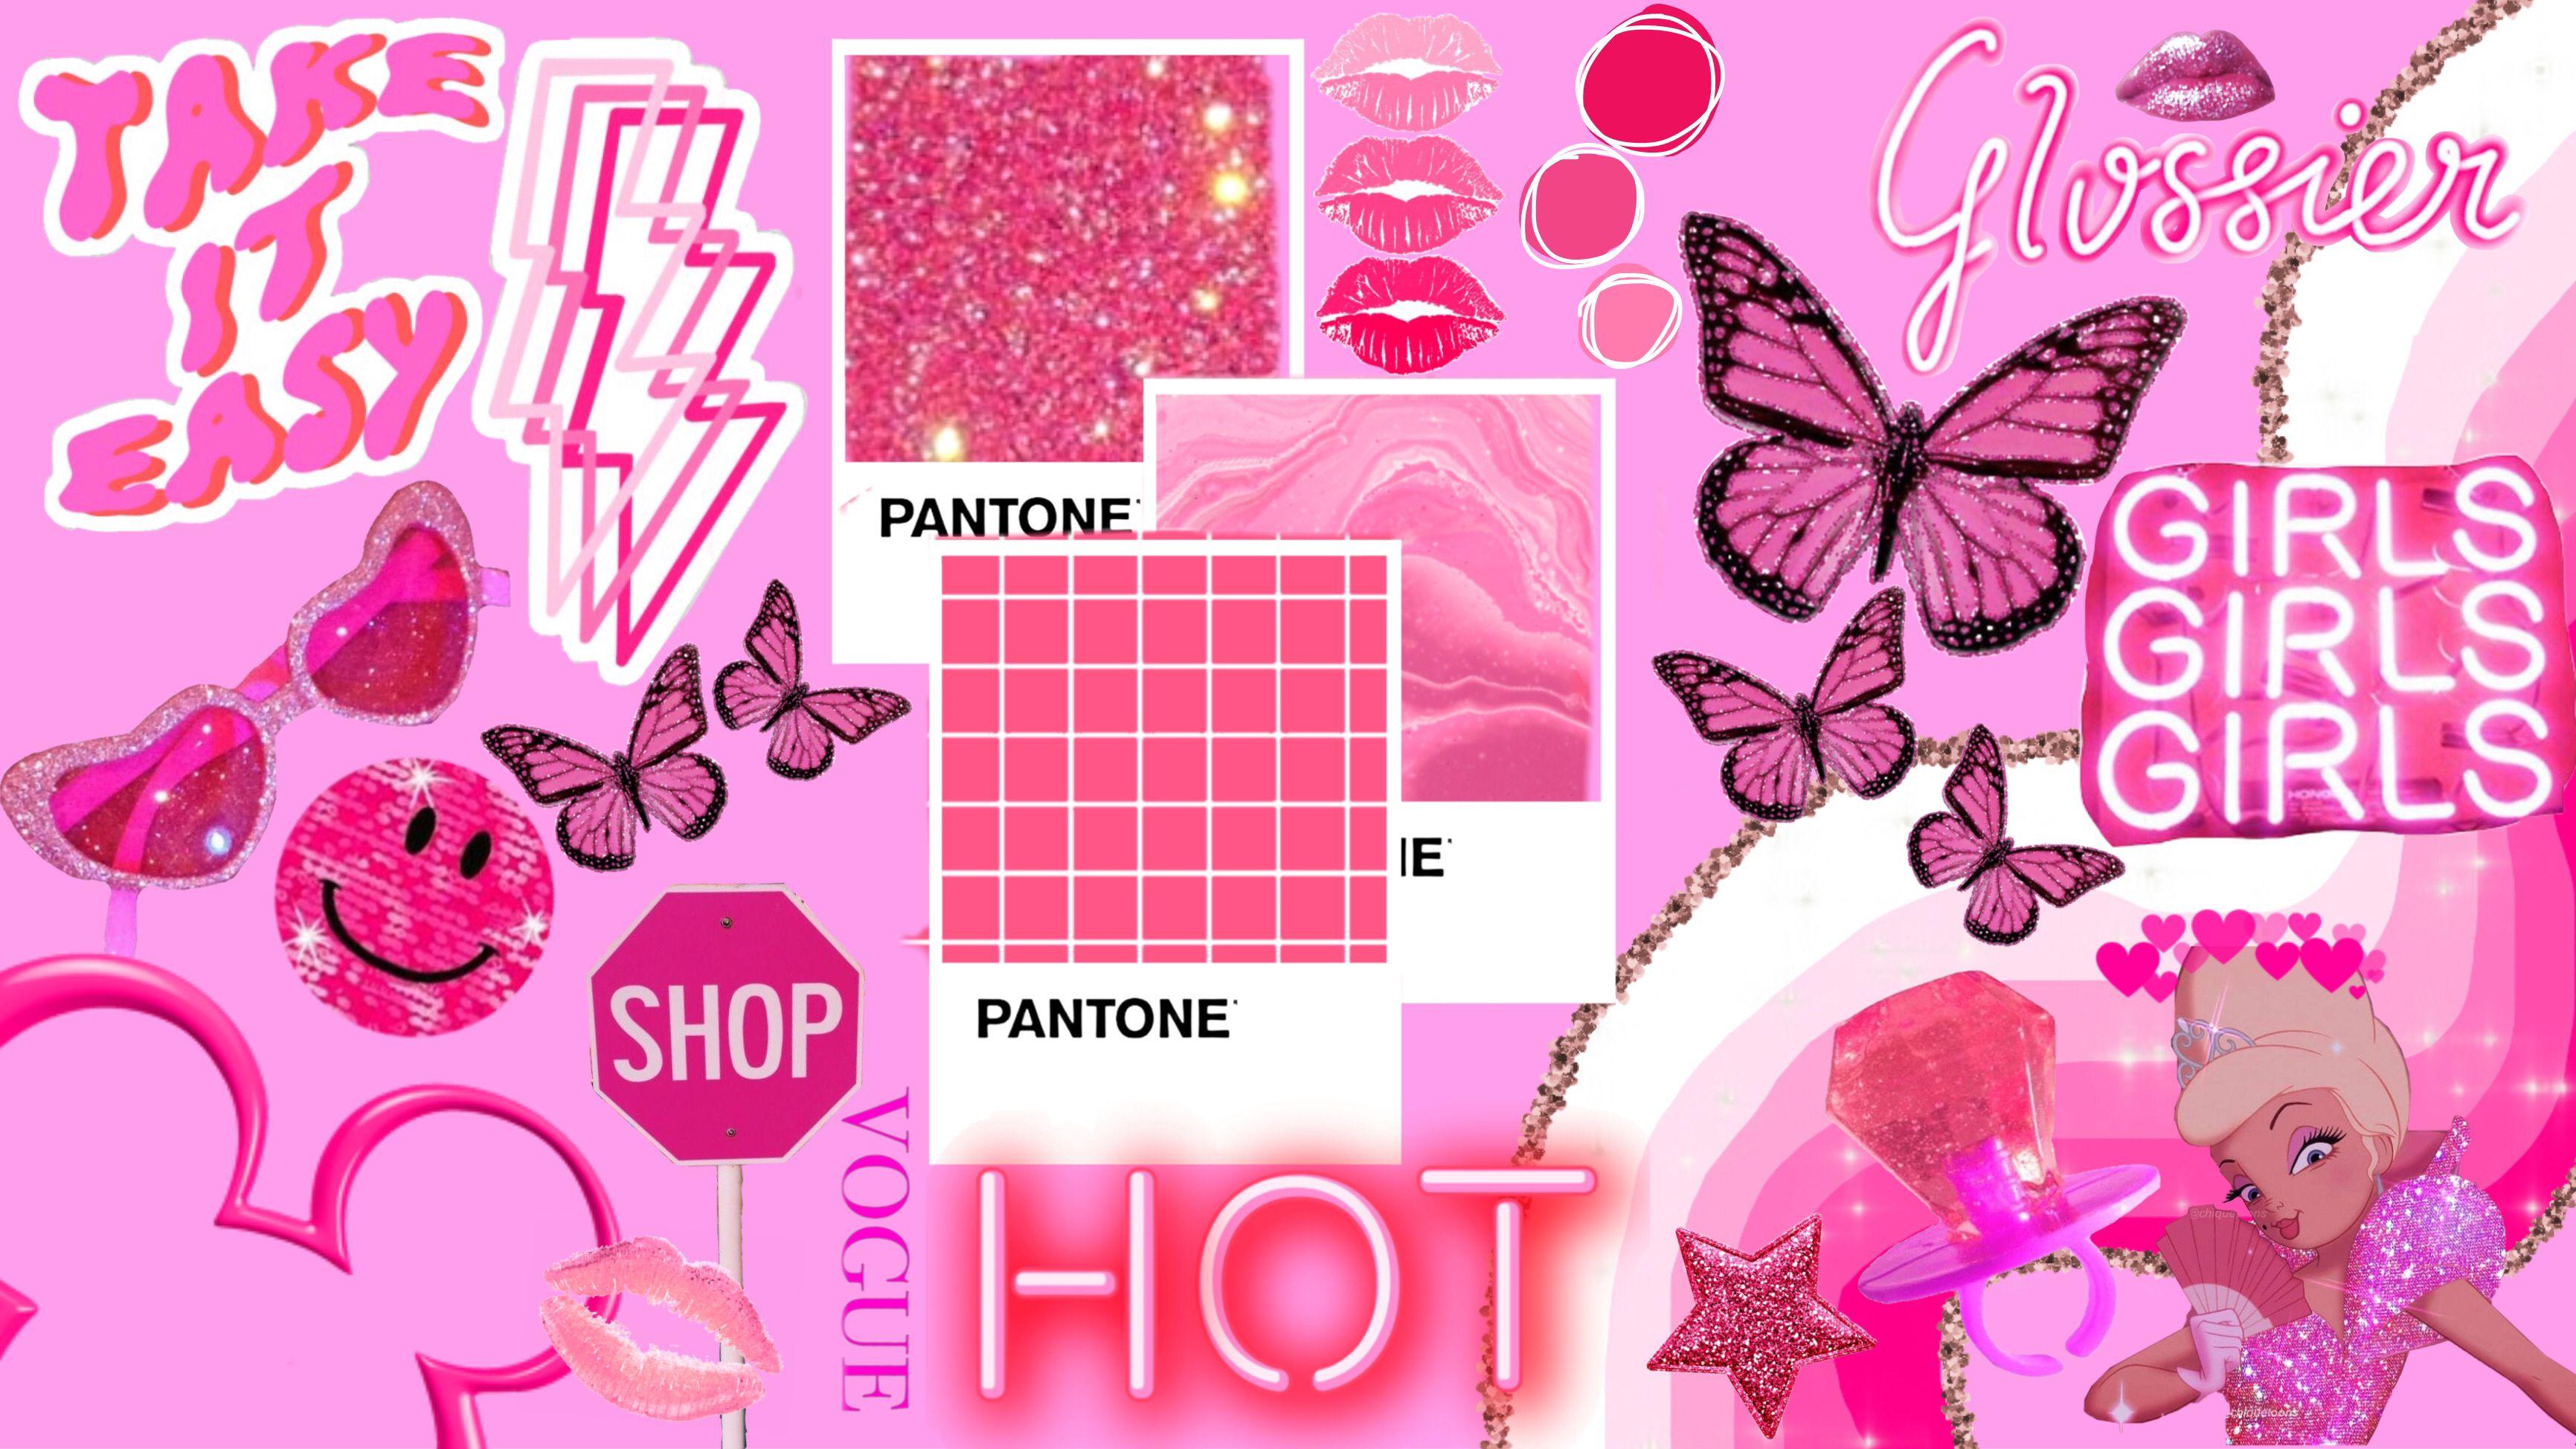 Hot Pink Aesthetic Wallpaper Laptop | vlr.eng.br